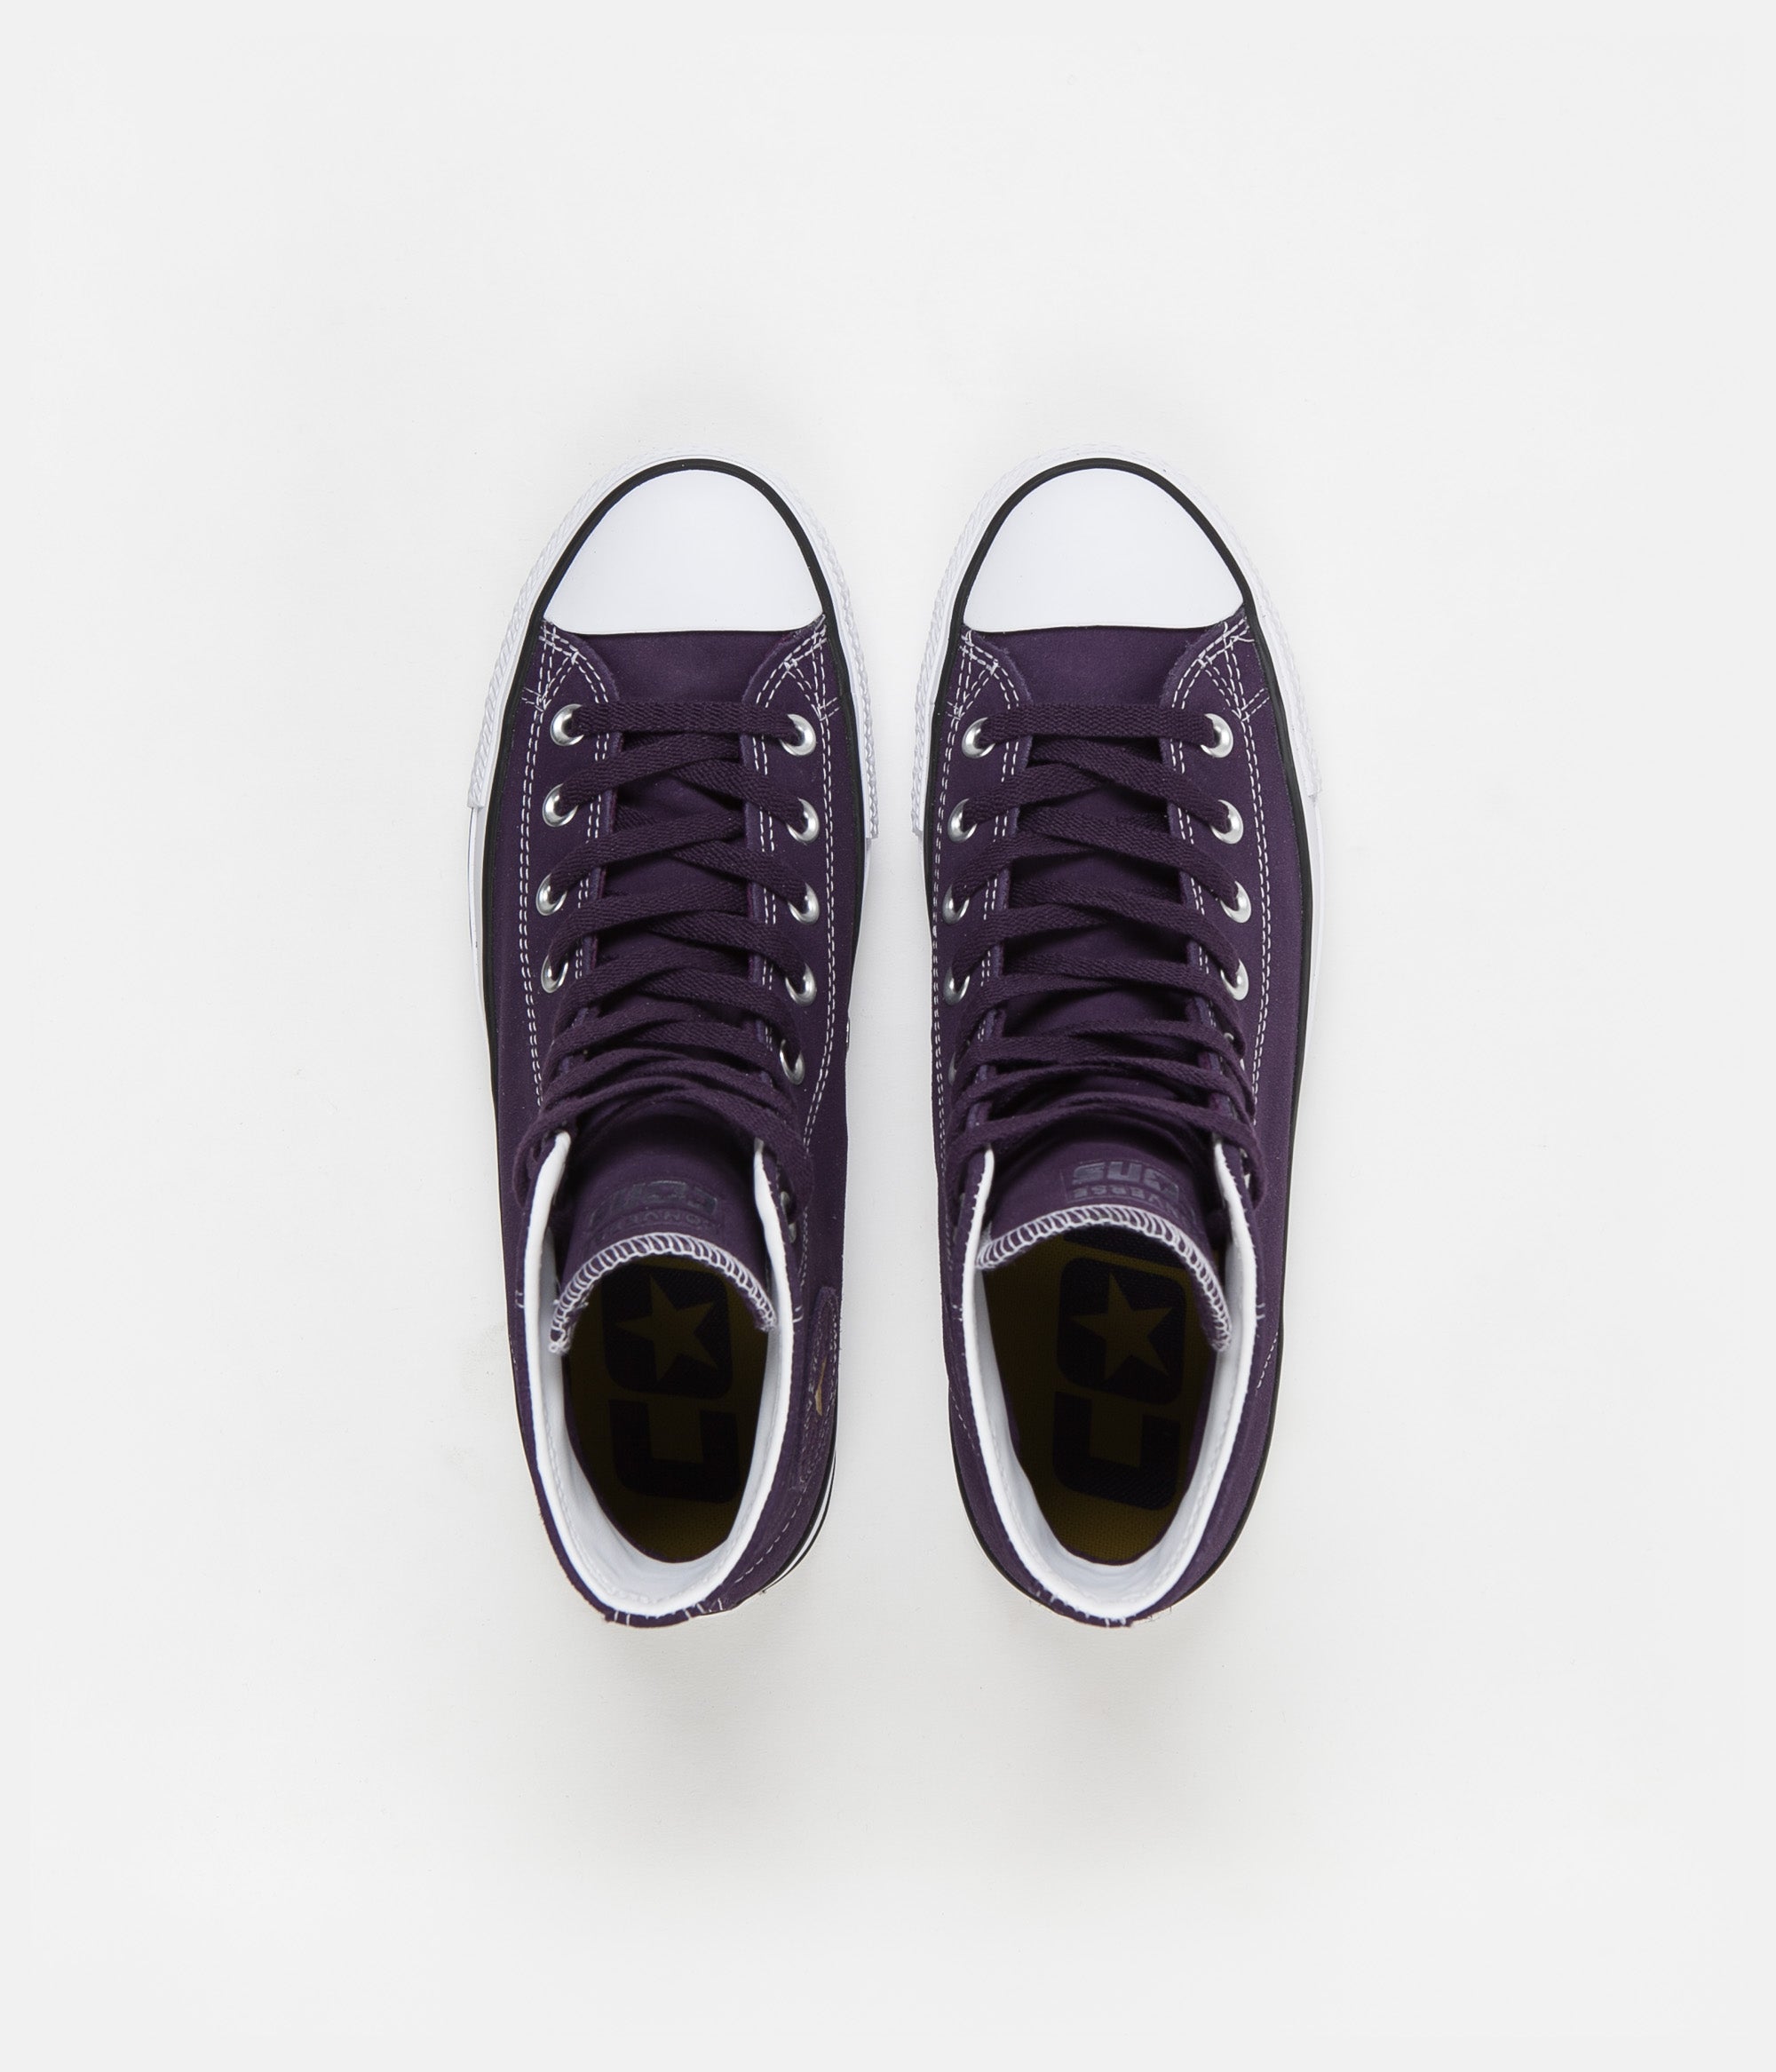 converse purple suede